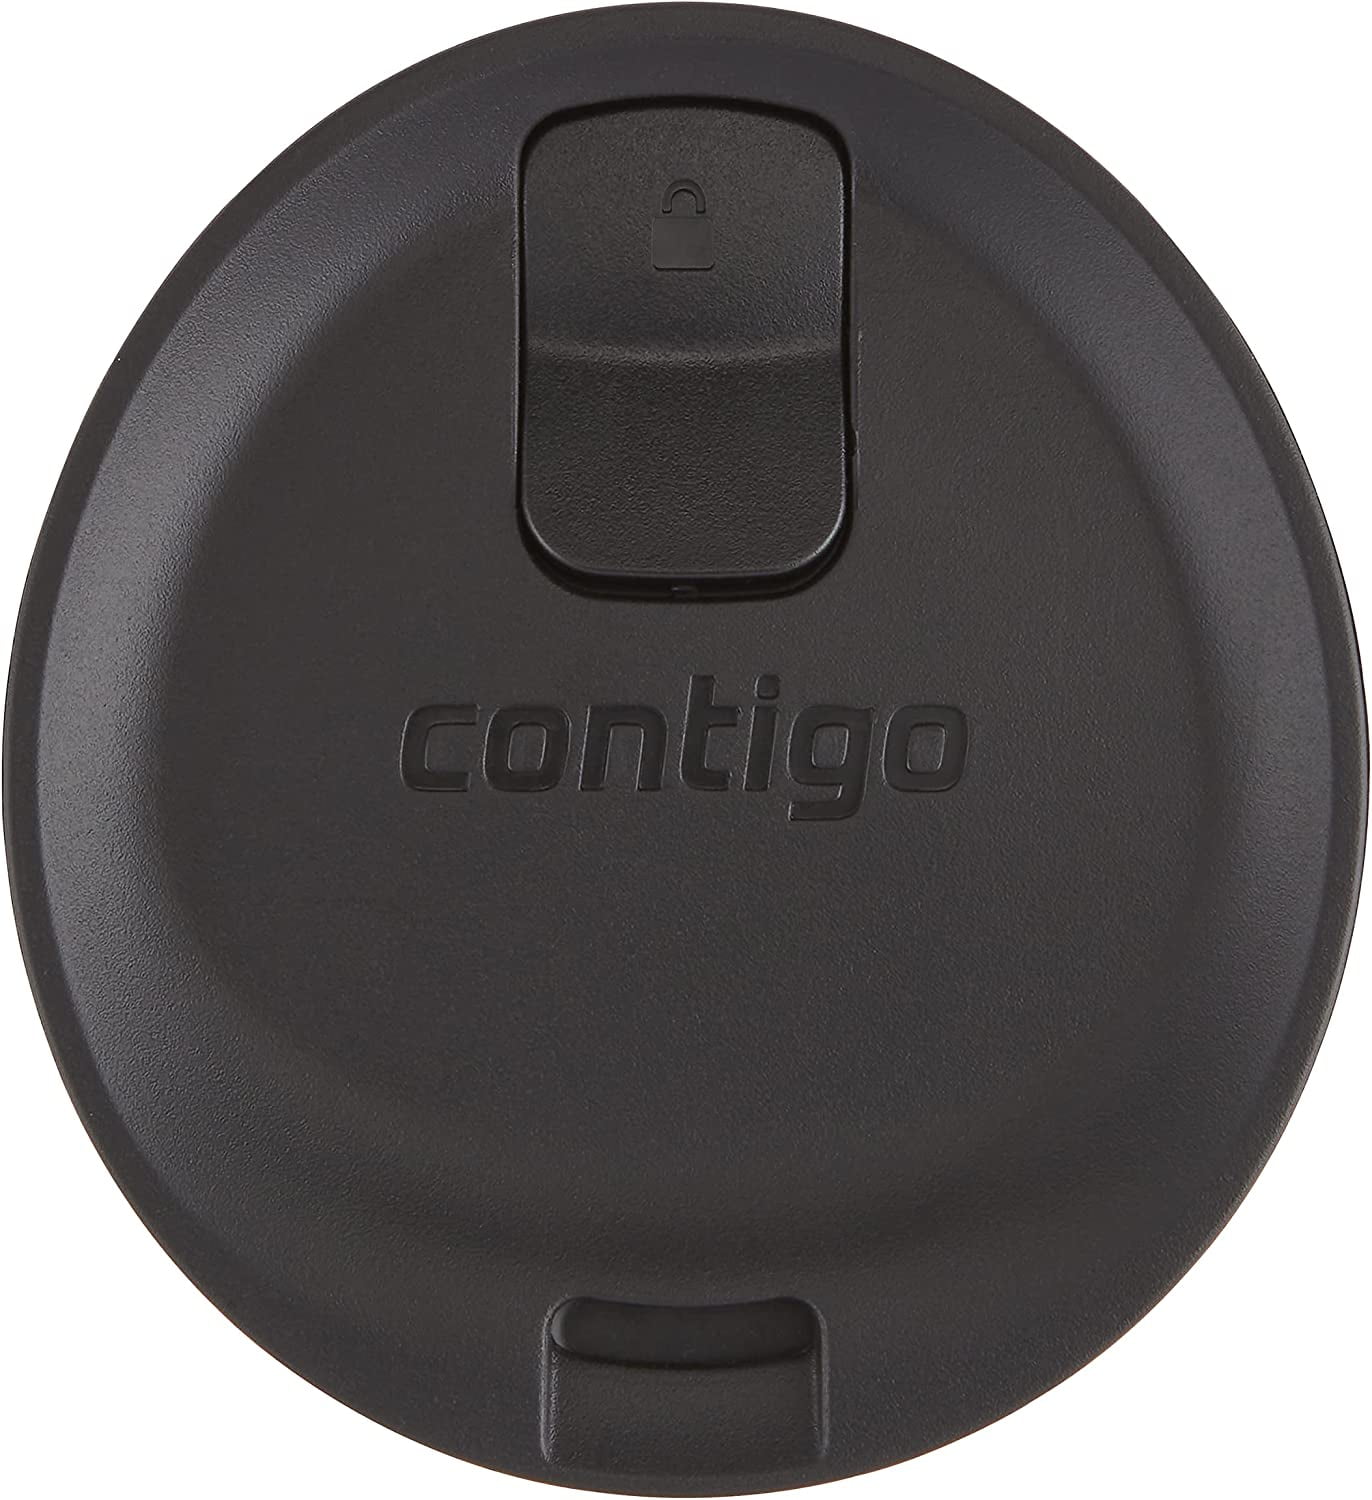 Contigo® West Loop 2.0 Travel Tumbler 16-Oz. - Personalization Available